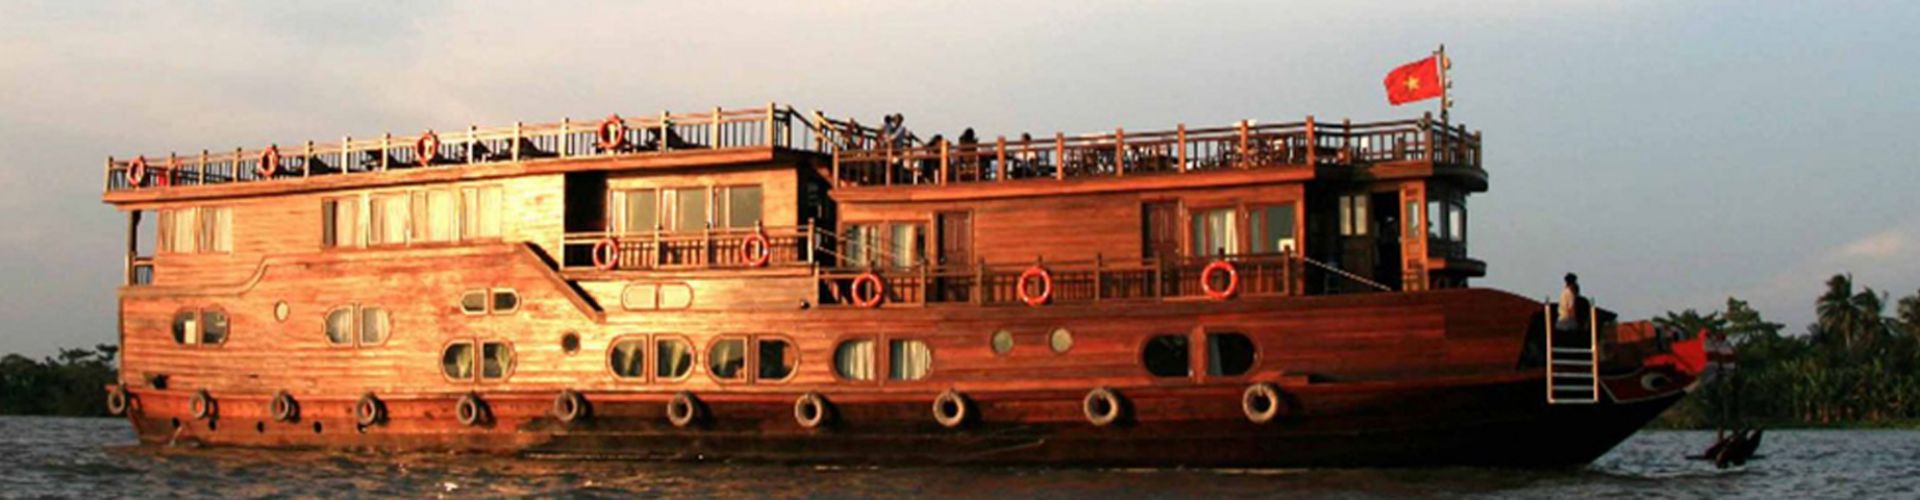 Mekong Delta River Cruise